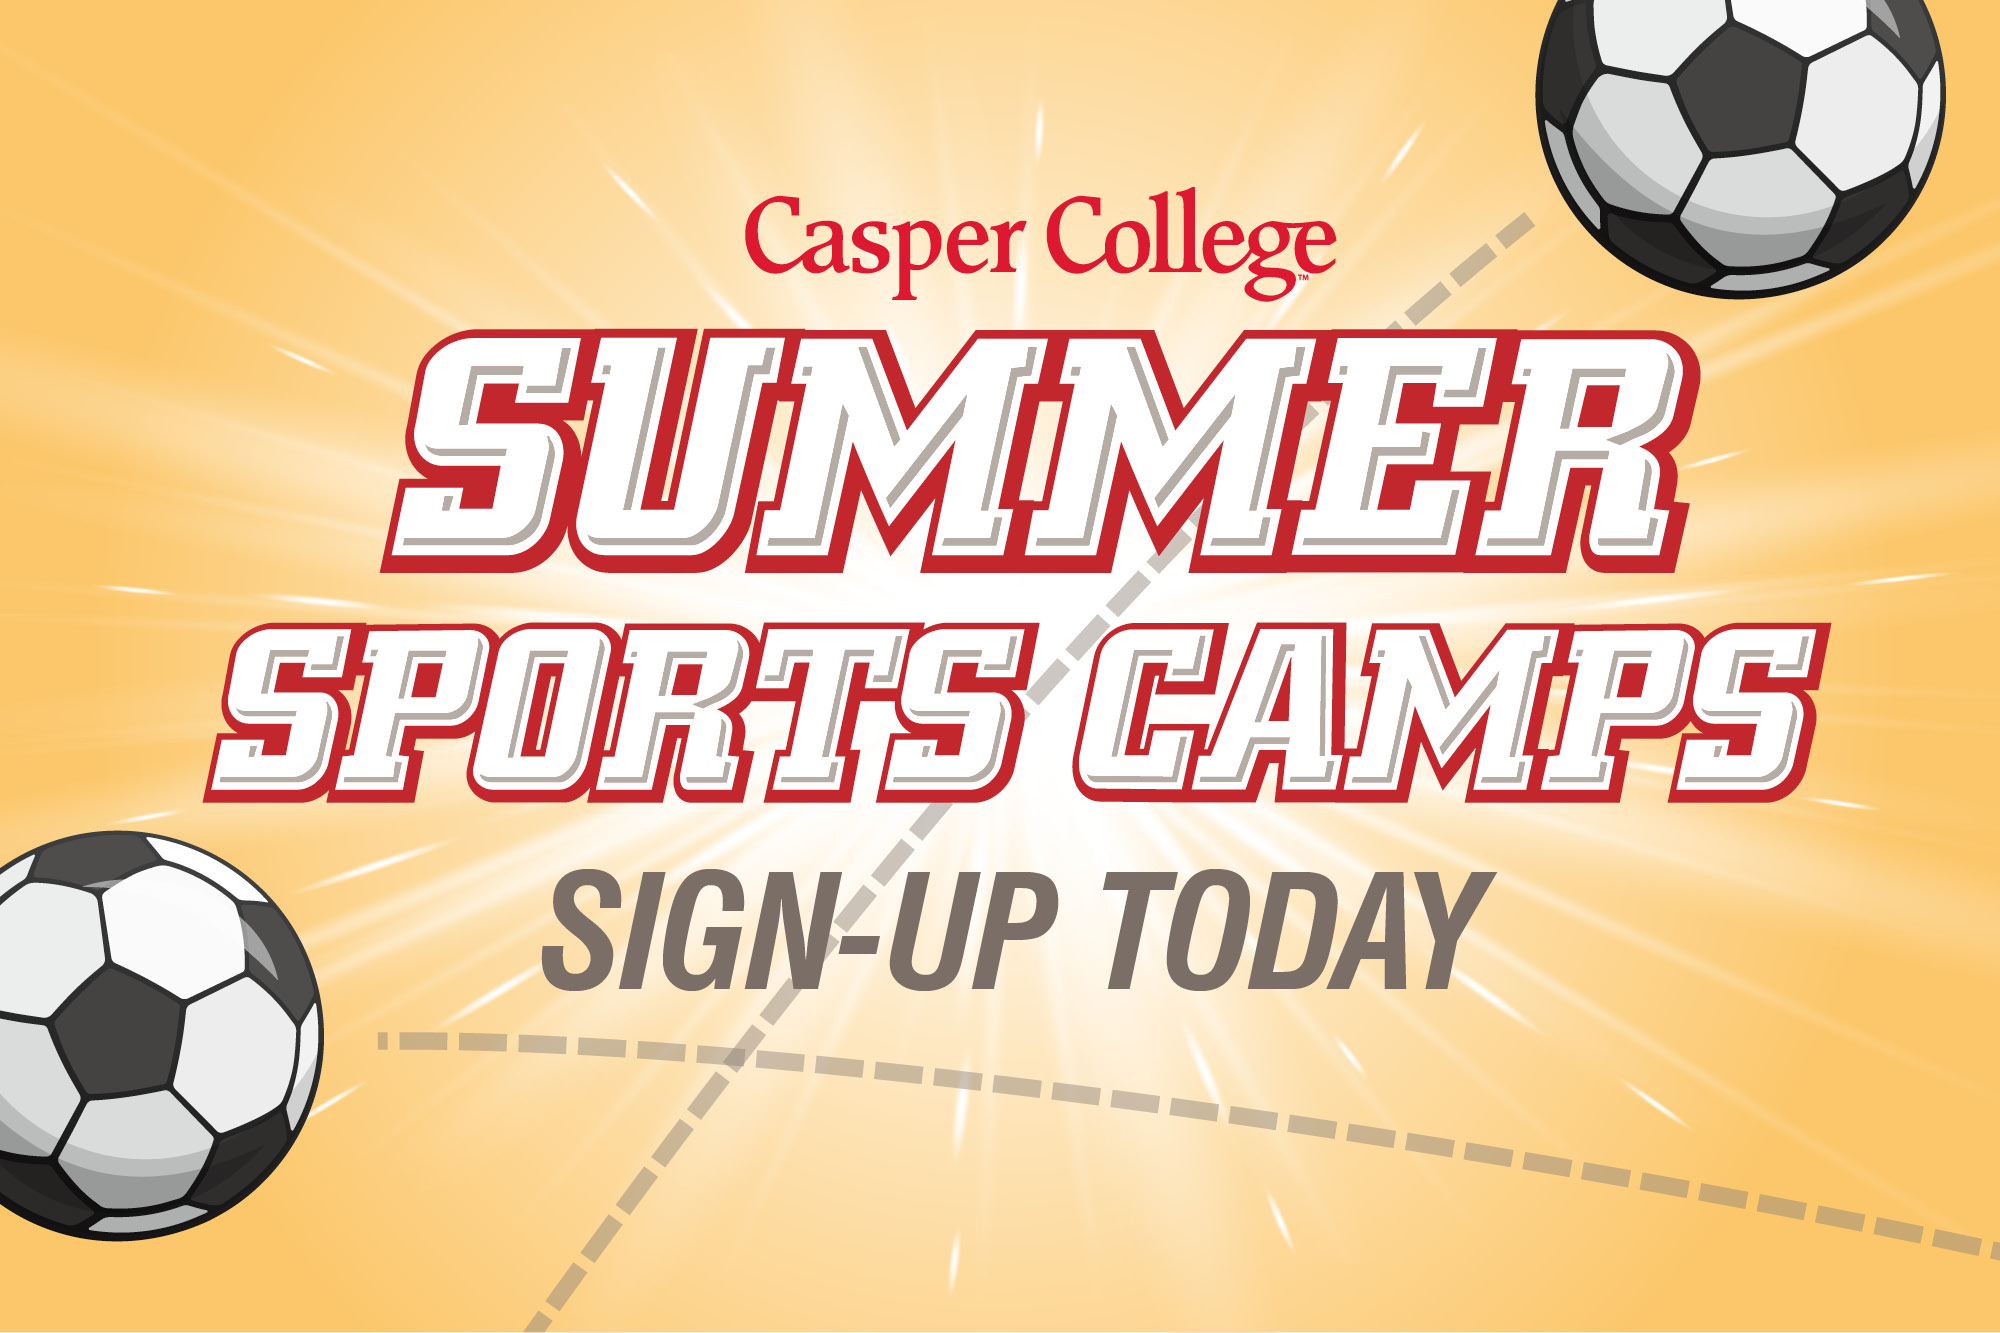 Image for Casper College Soccer Camp Release.